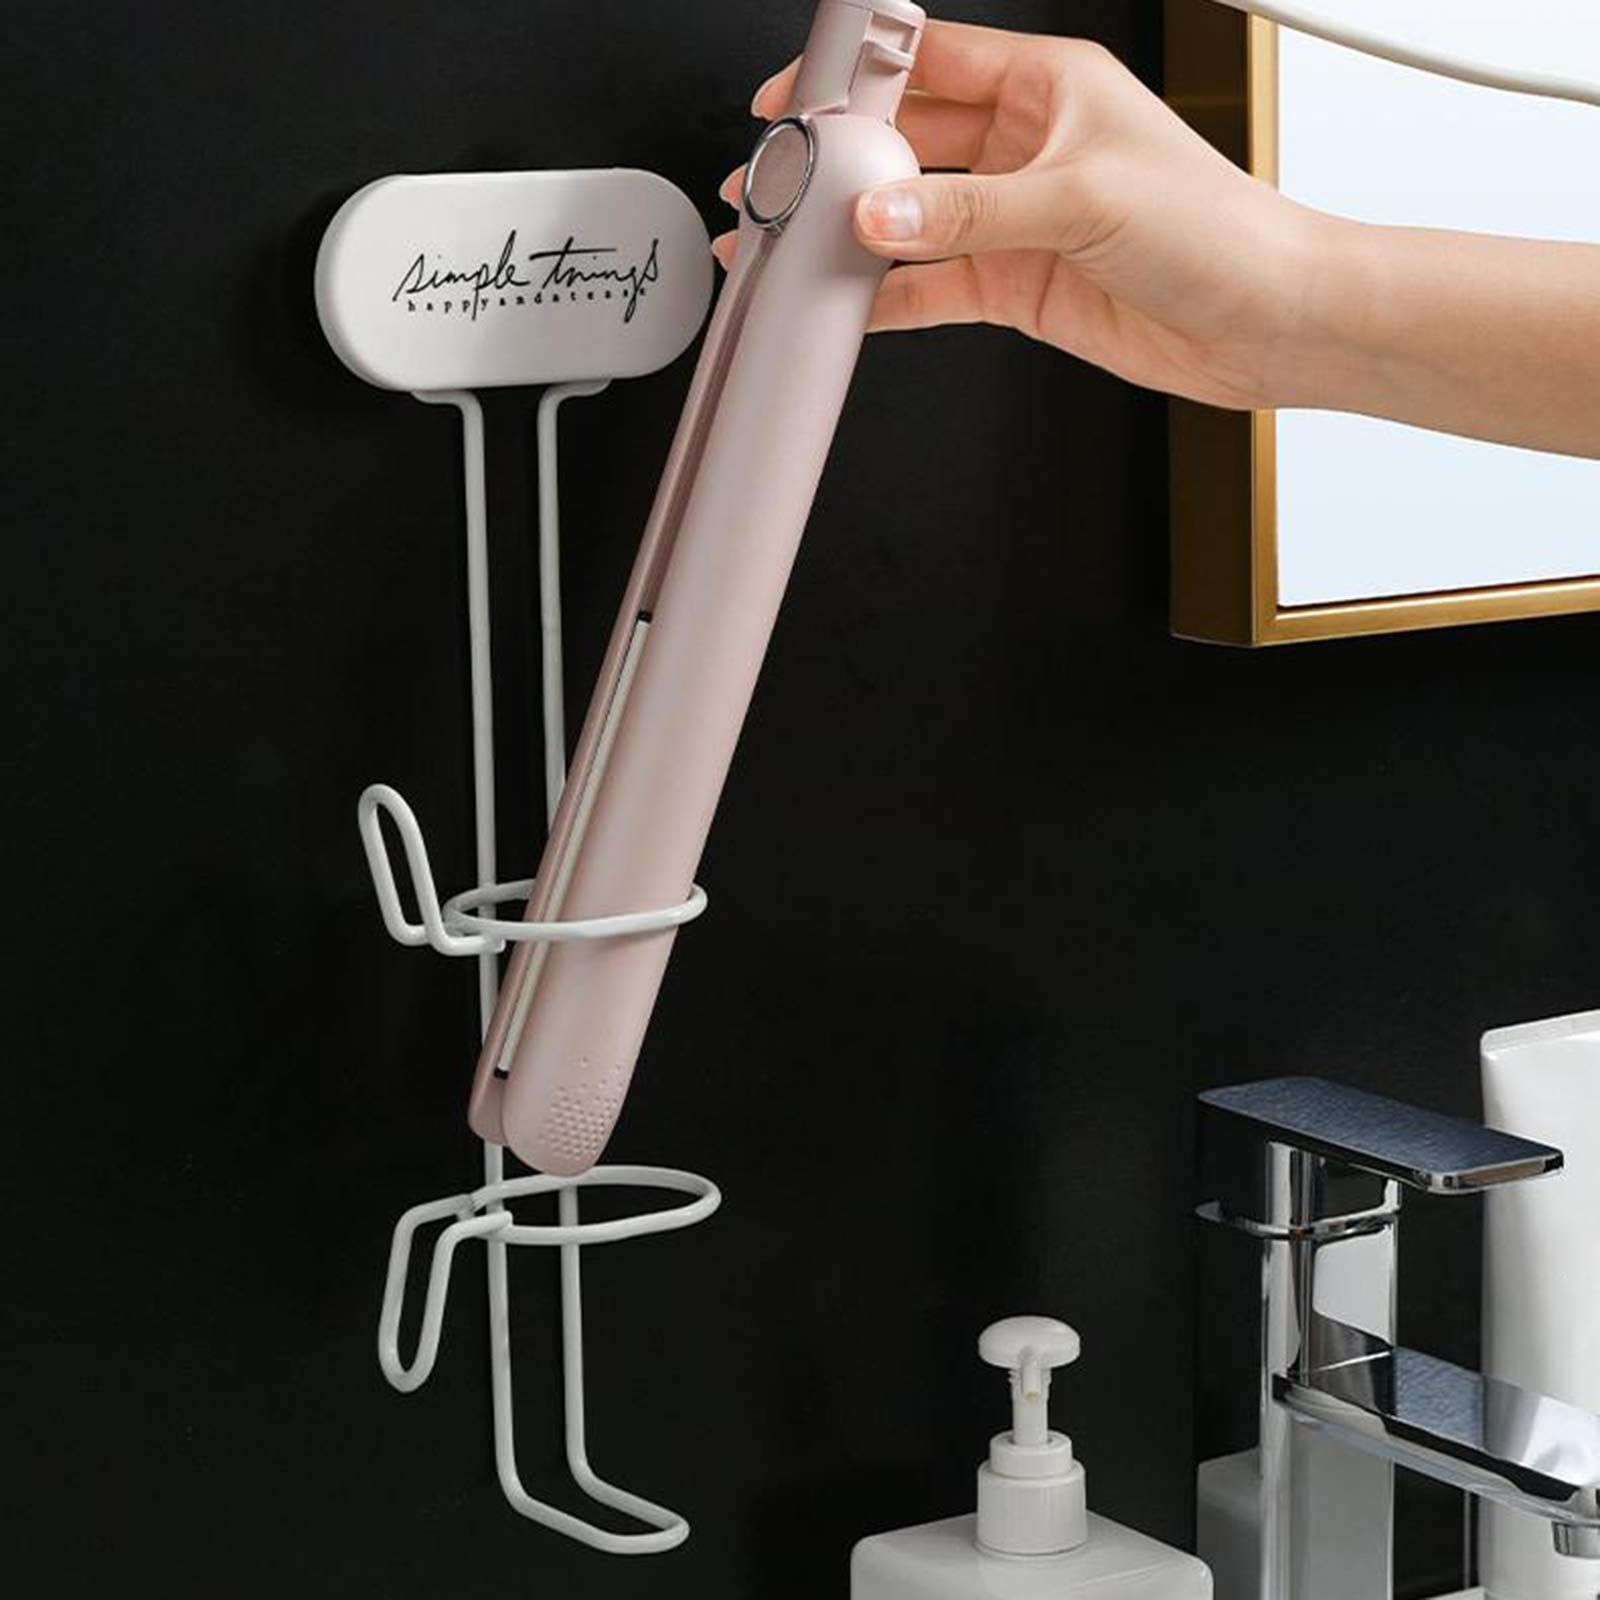 FOXNUTANUJH Bathroom Accessories Organizer Stick Stand for Flat Irons Holder Hair Straightener Hanging Rack Hair Dryer Holder Wall Mounted Hair Tool Organizer